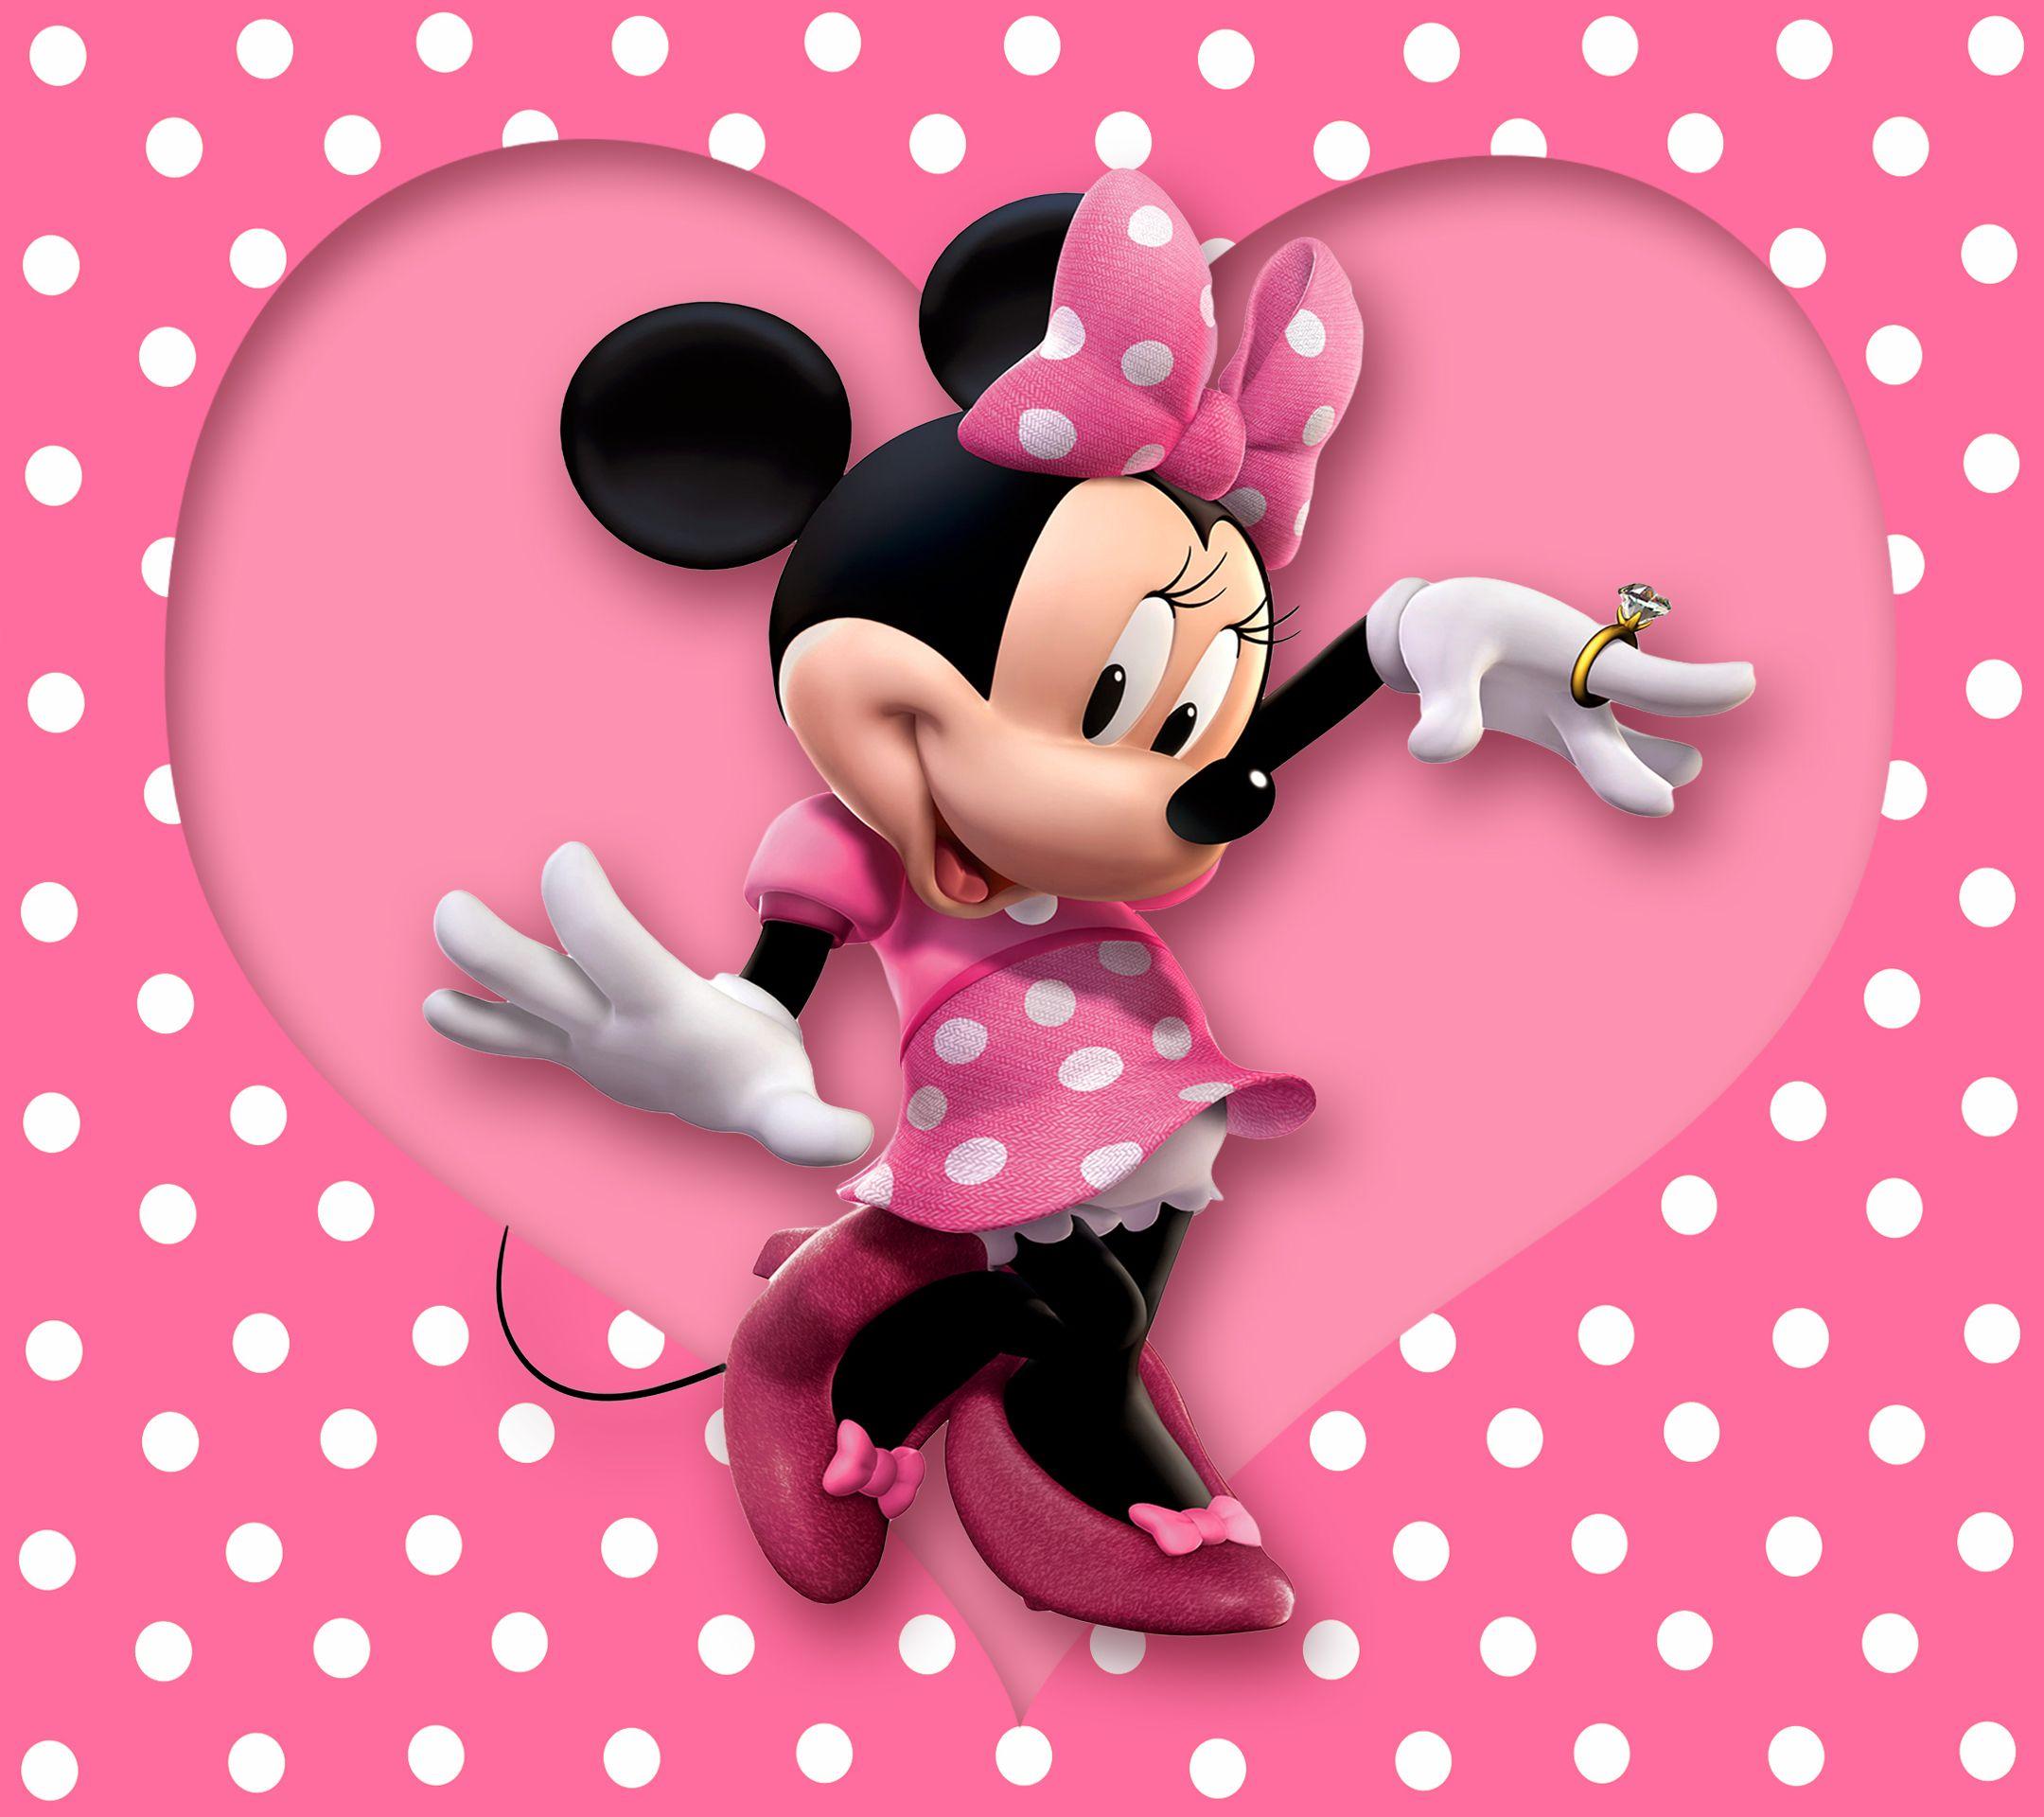 Minnie mouse Wallpaper, cartoon, disney, pink, polka dots, heart